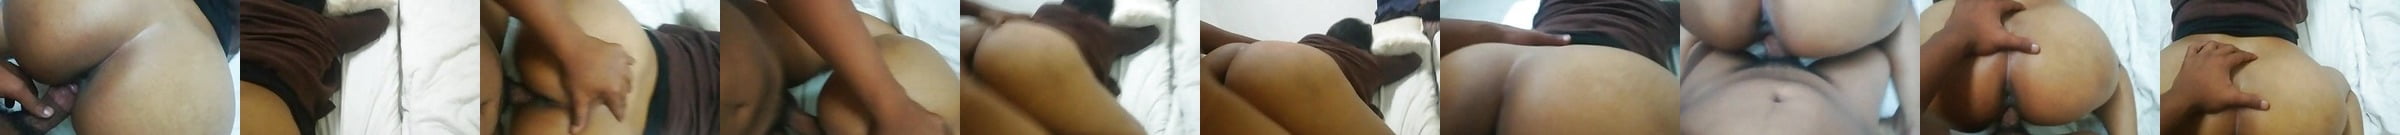 malay voyeur homemade video Sex Images Hq